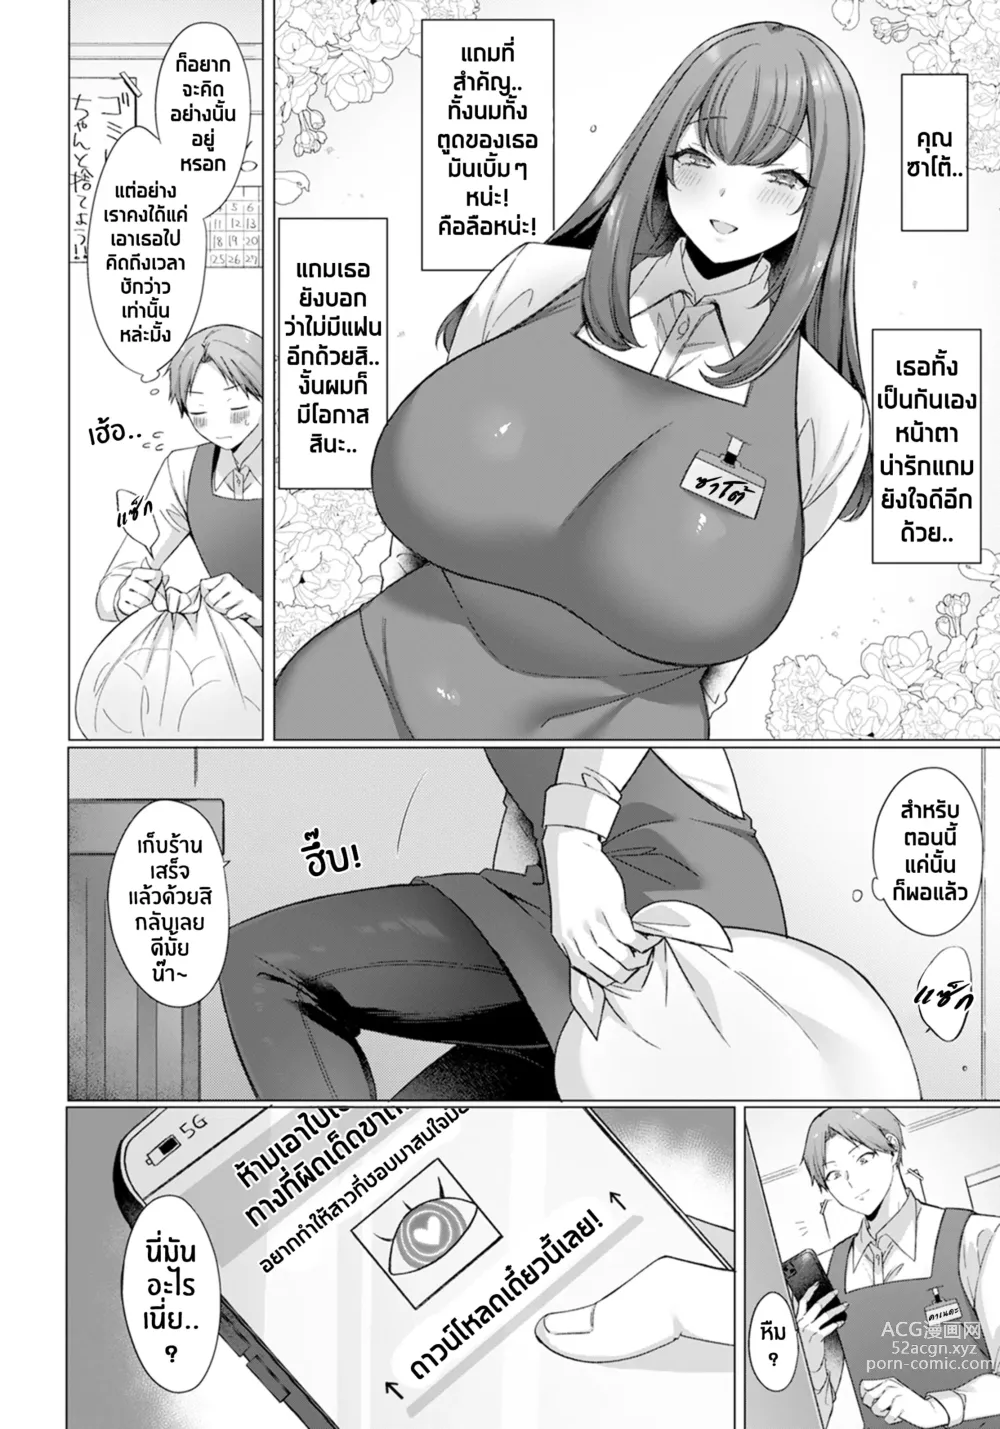 Page 2 of manga แอพจัดการความรู้สึกทางเพศ